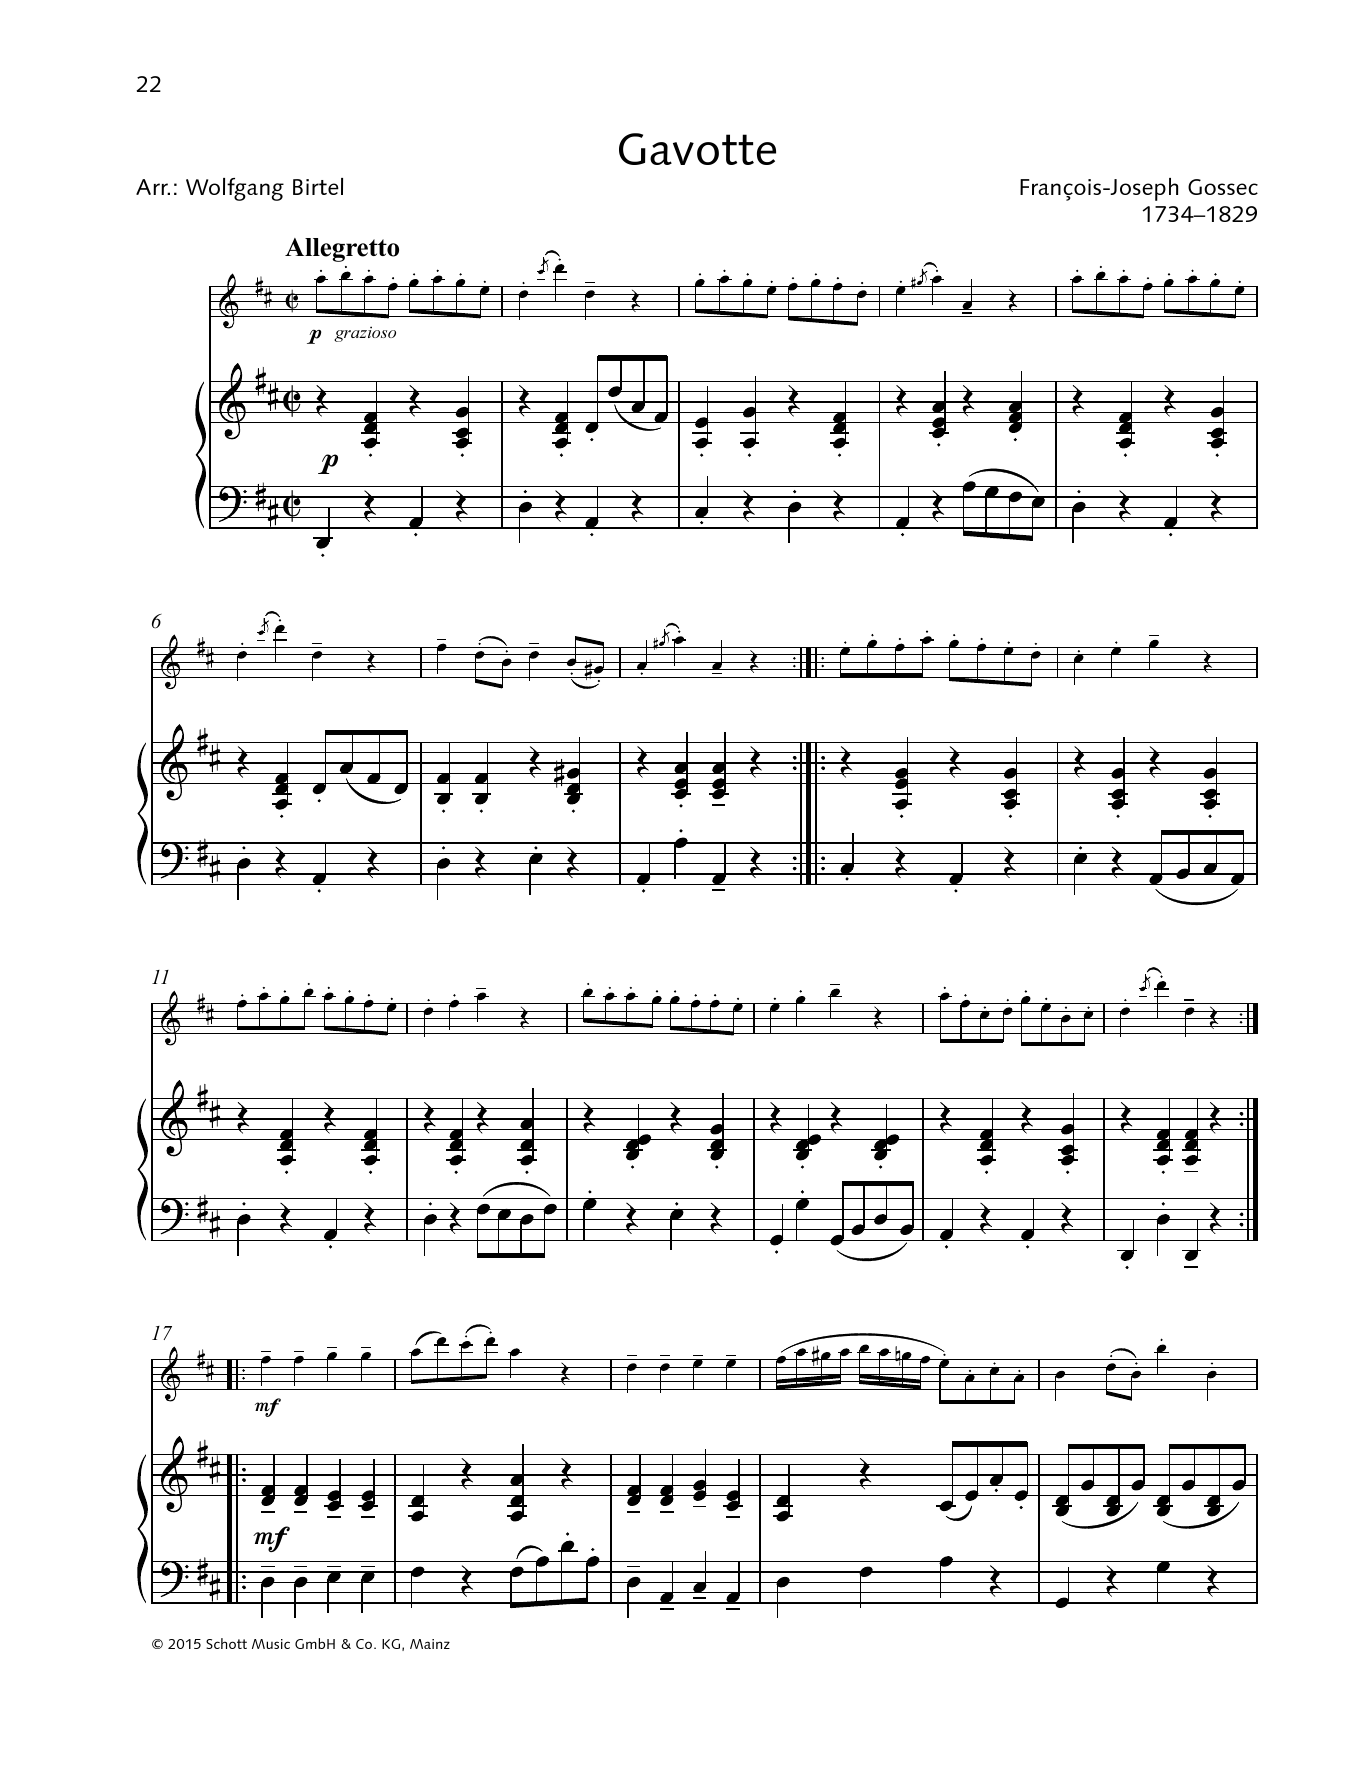 Francois-Joseph Gossec Gavotte Sheet Music Notes & Chords for String Solo - Download or Print PDF